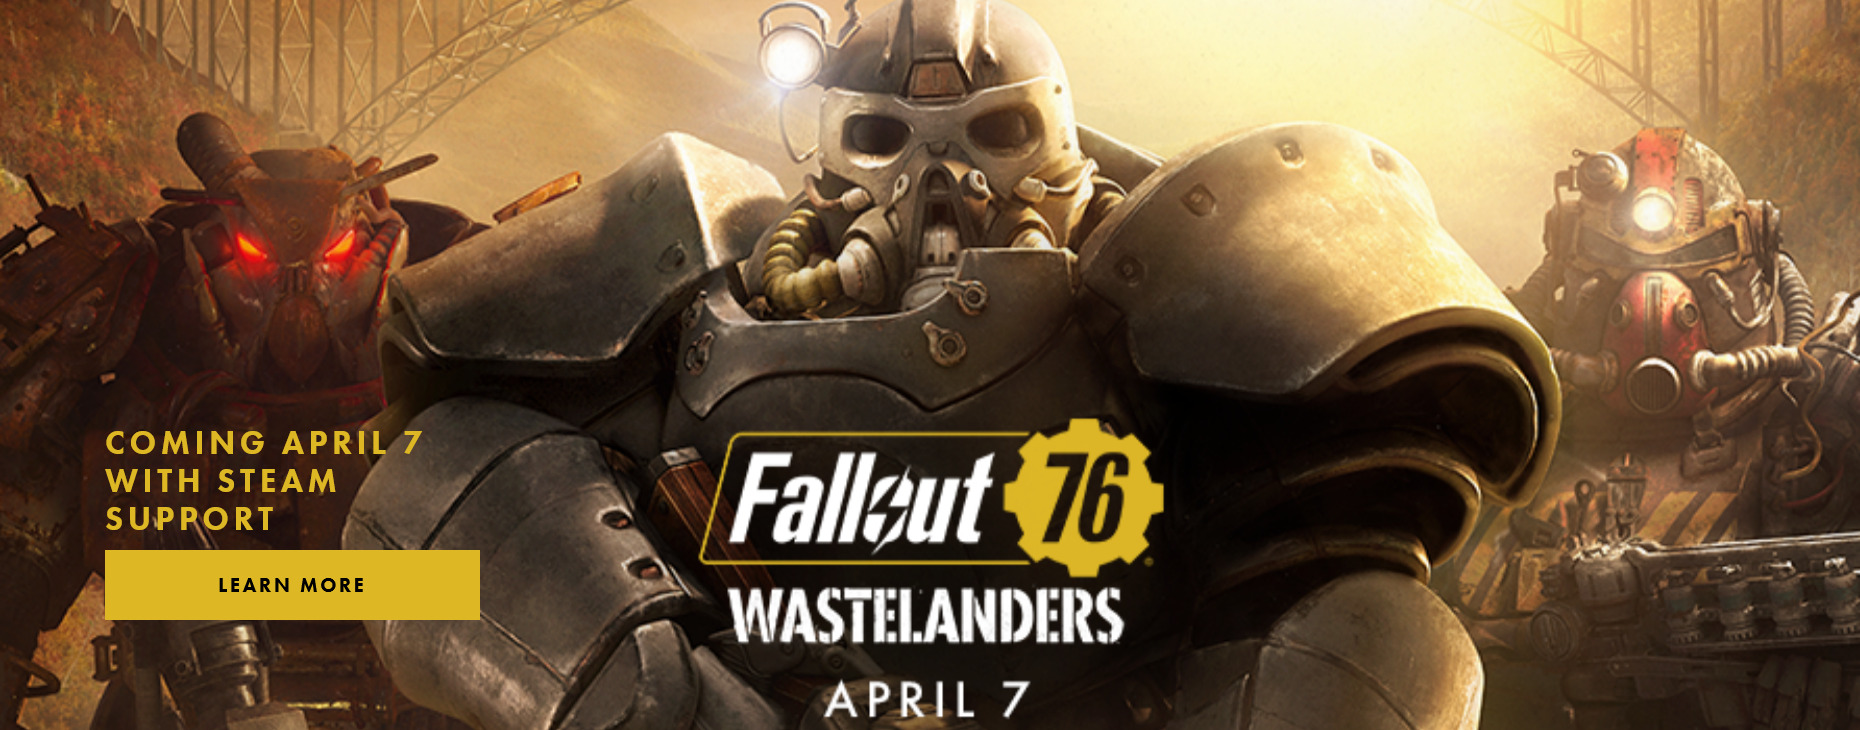 Screenshot_2020-02-05 Fallout 76 Our Future Begins.jpg